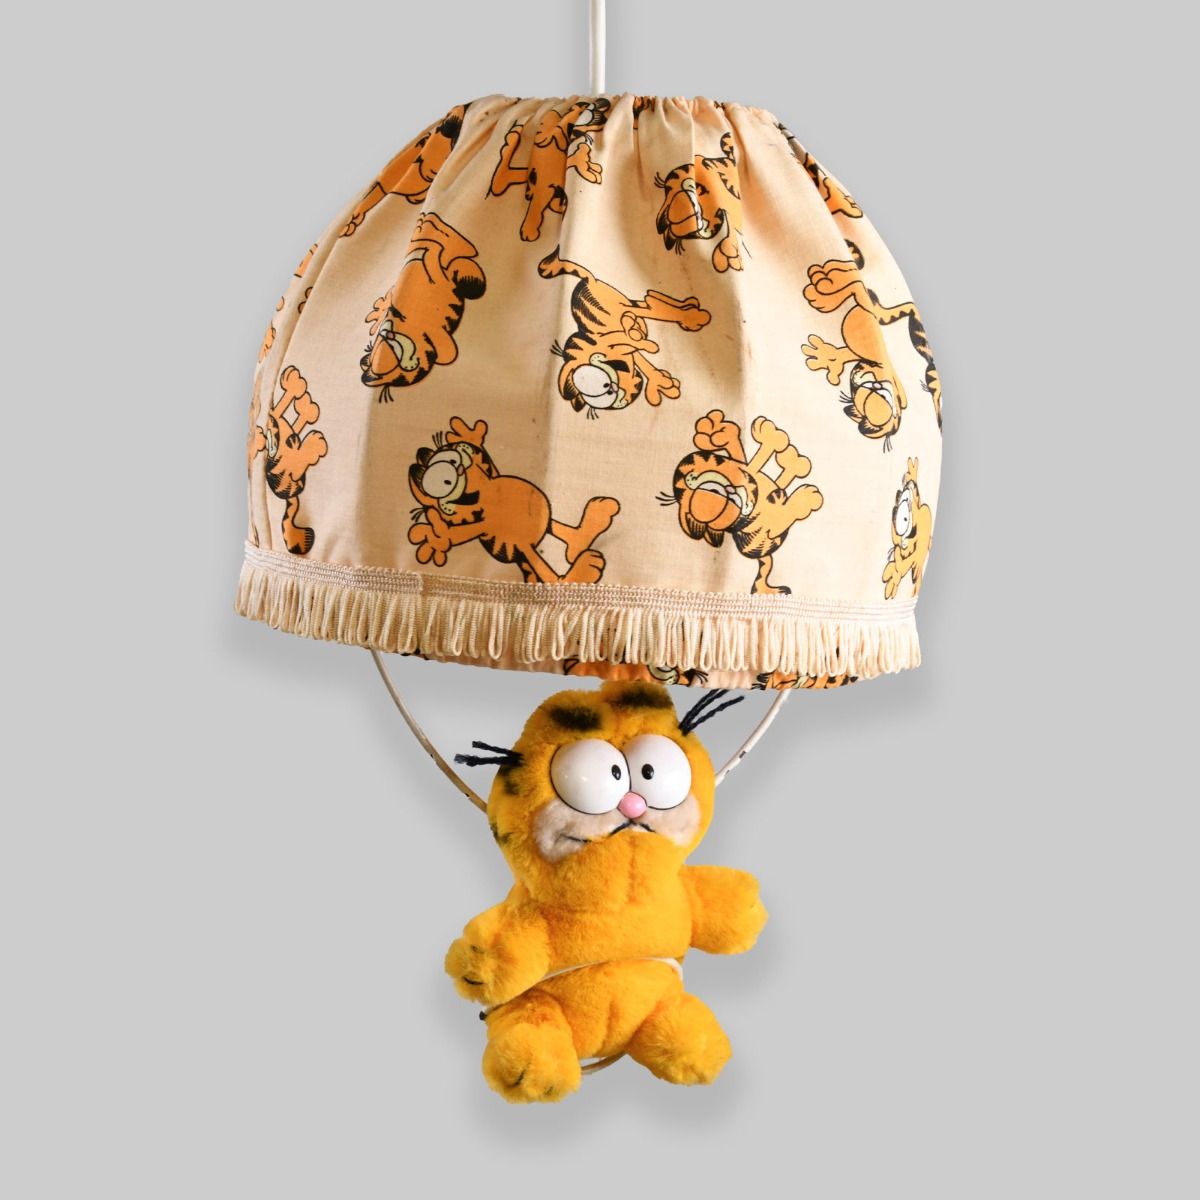 Vintage 1980s Garfield Lamp Shade